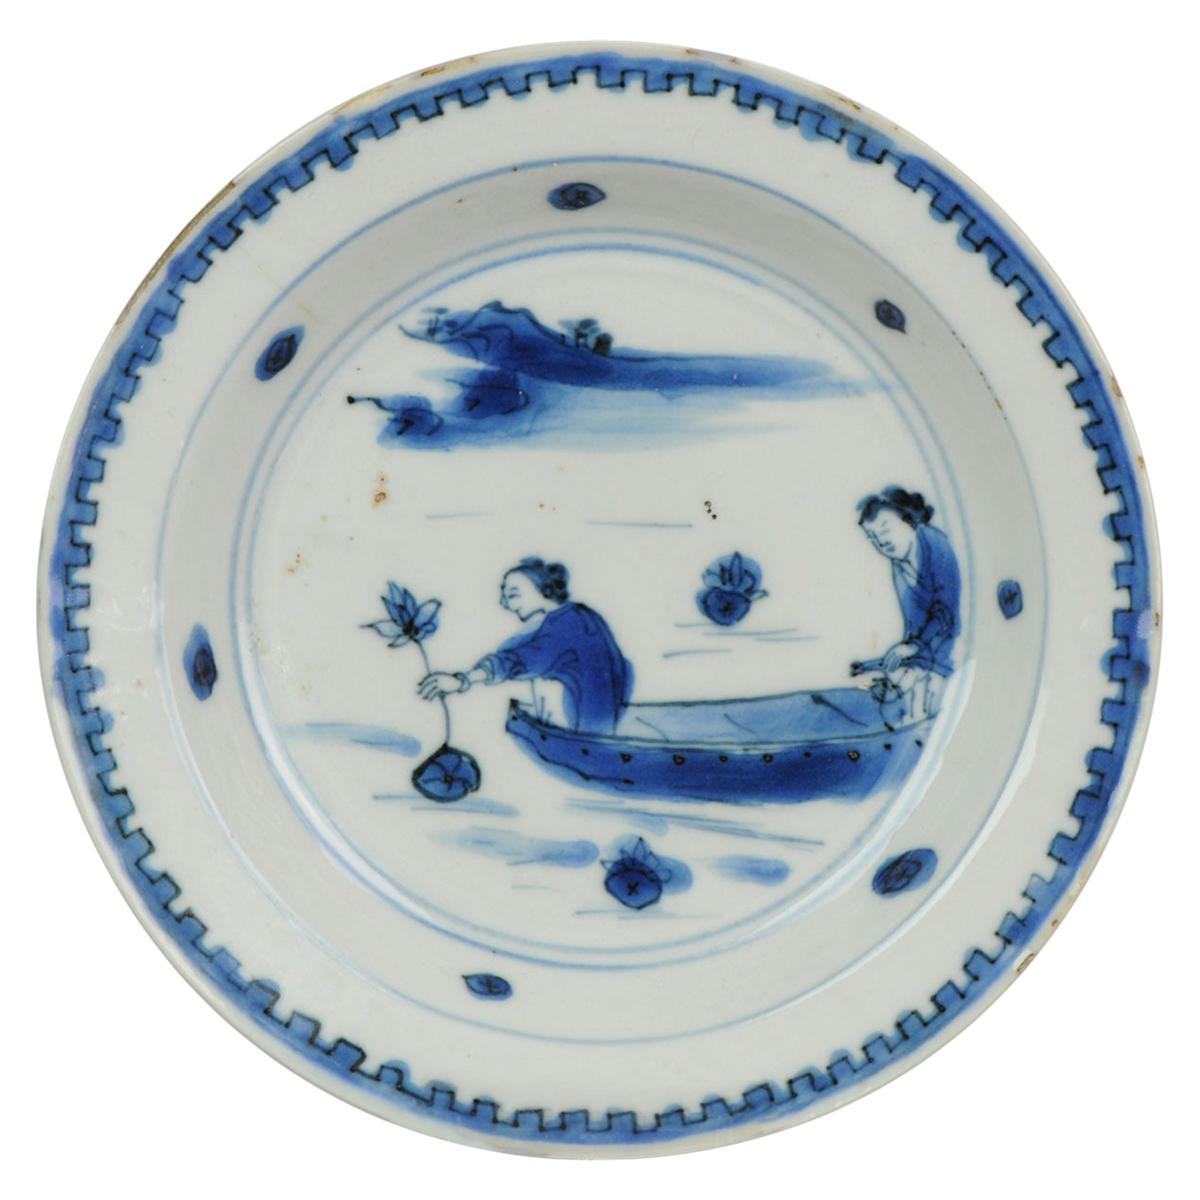 Chinese Porcelain Plate 17th Century Lotus Fishing Ming Dynasty Tianqi/Chongzhen